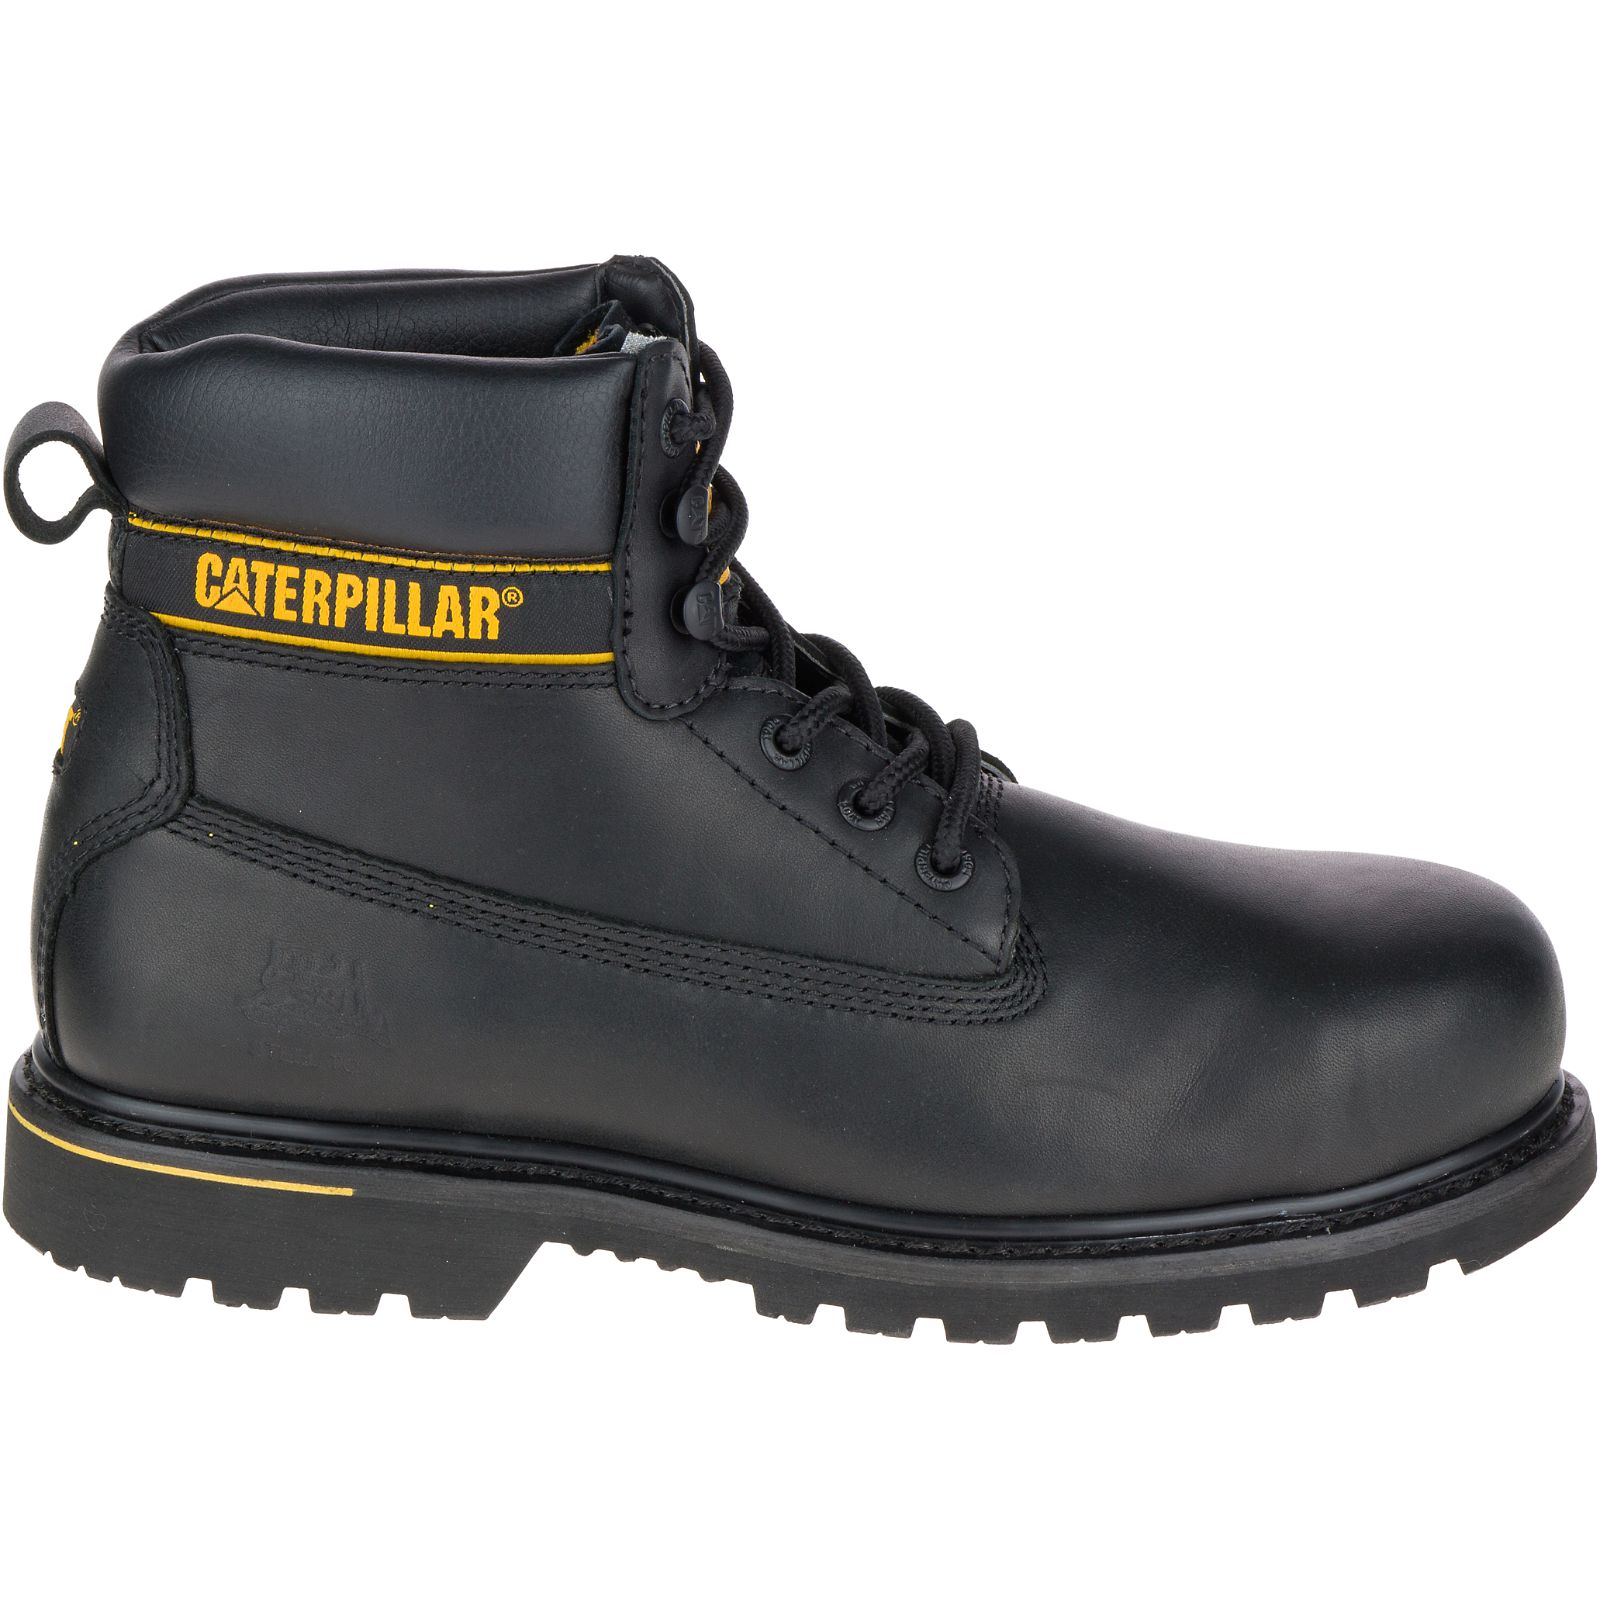 Caterpillar Work Boots Online UAE - Caterpillar Holton Steel Toe S3 Hro Src Mens - Black HFVGCO896